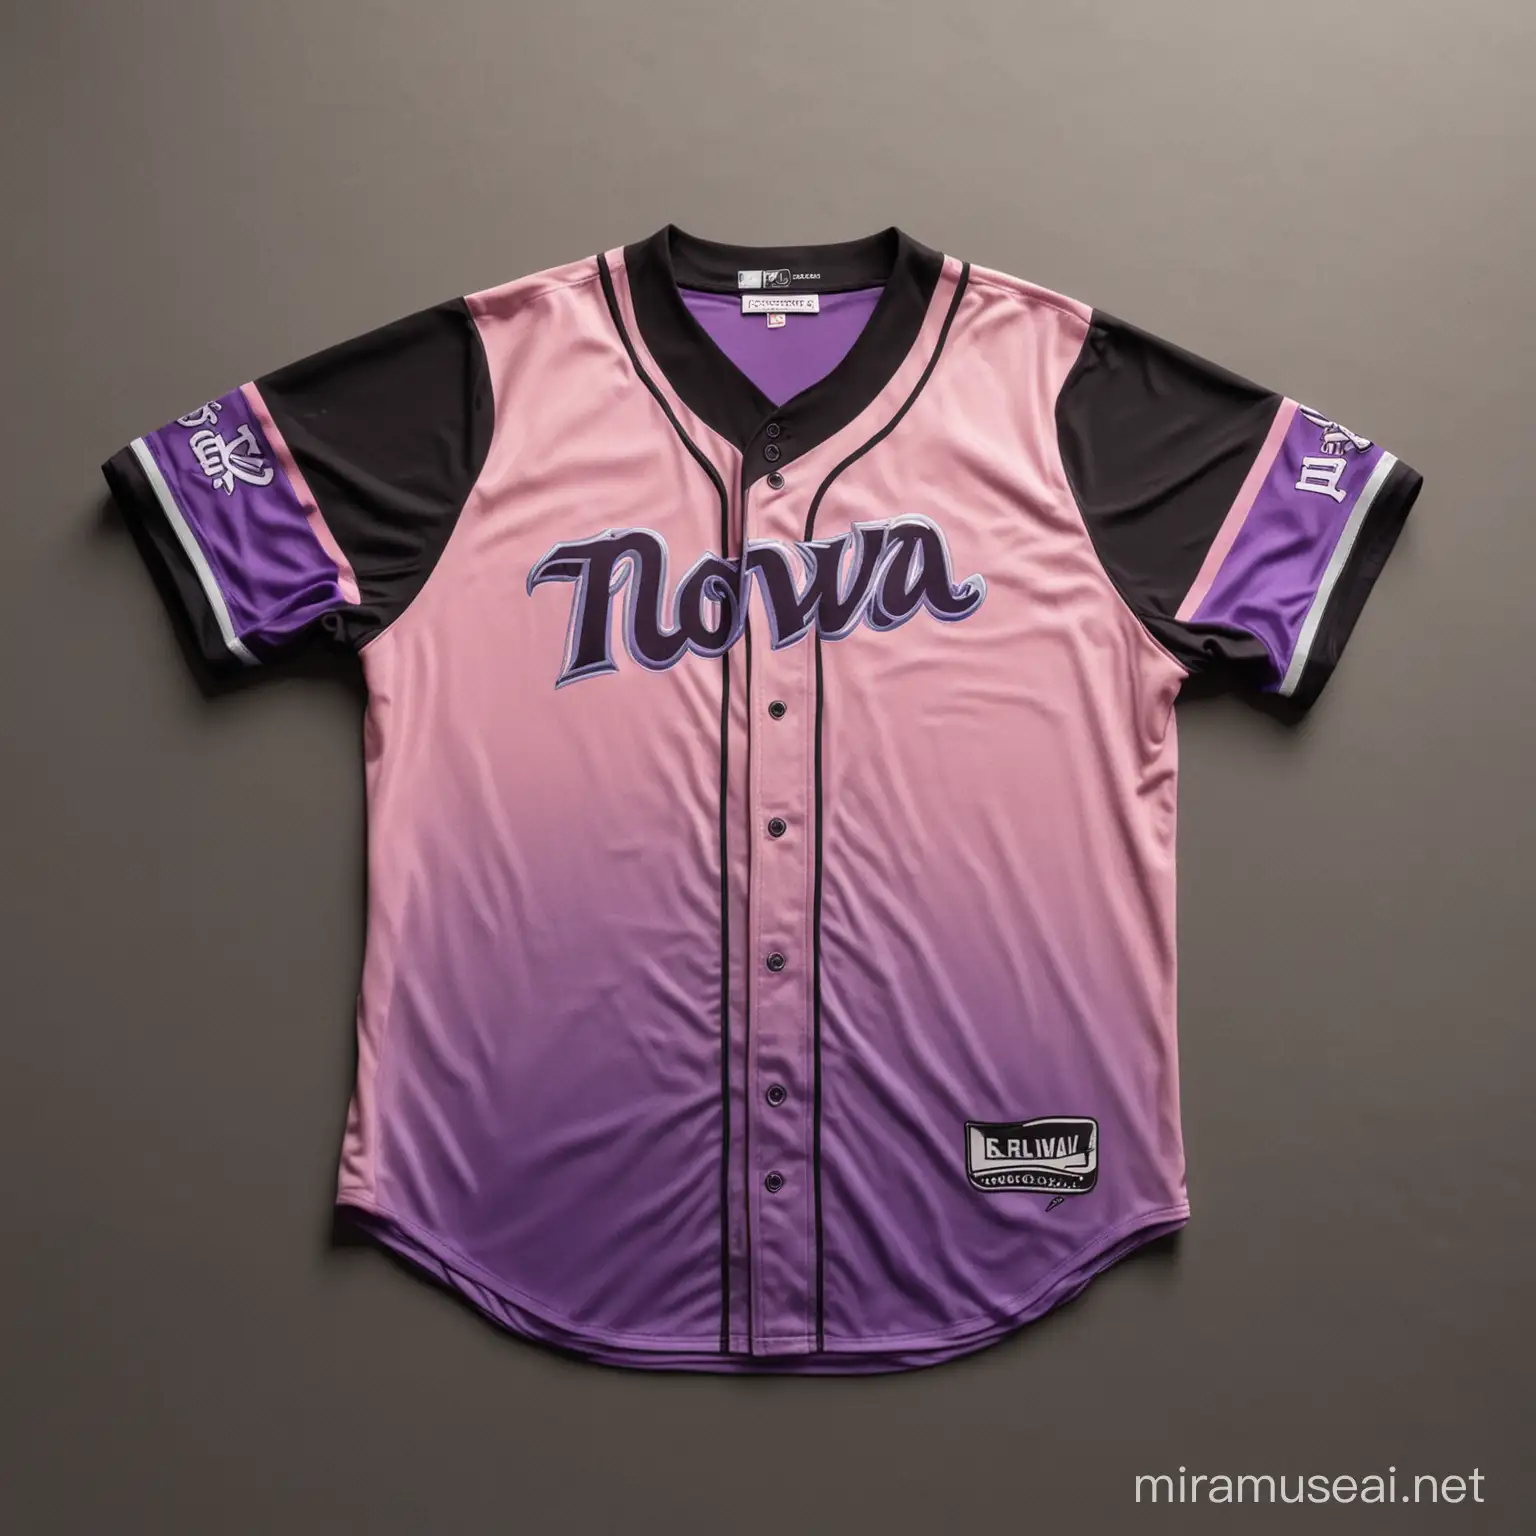 Custom Black Baseball Jersey with Nova Name and PinkPurple Accents